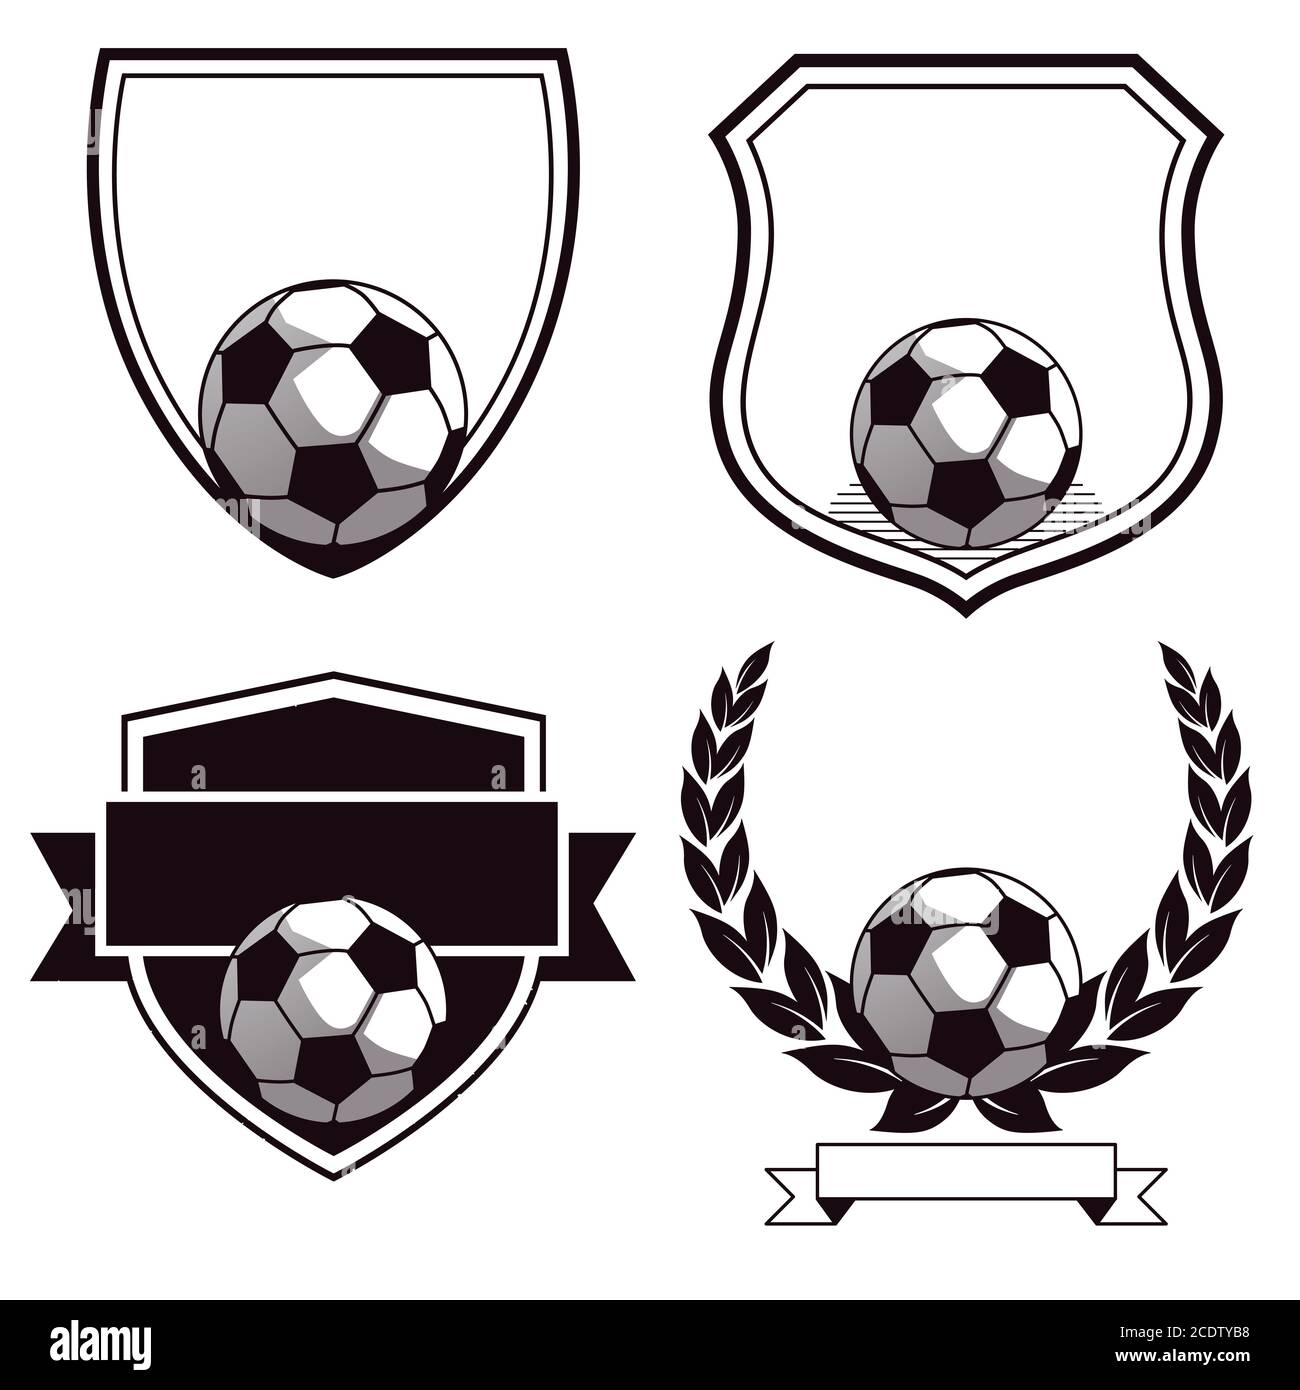 Ensemble d'emblèmes du club de football Banque D'Images